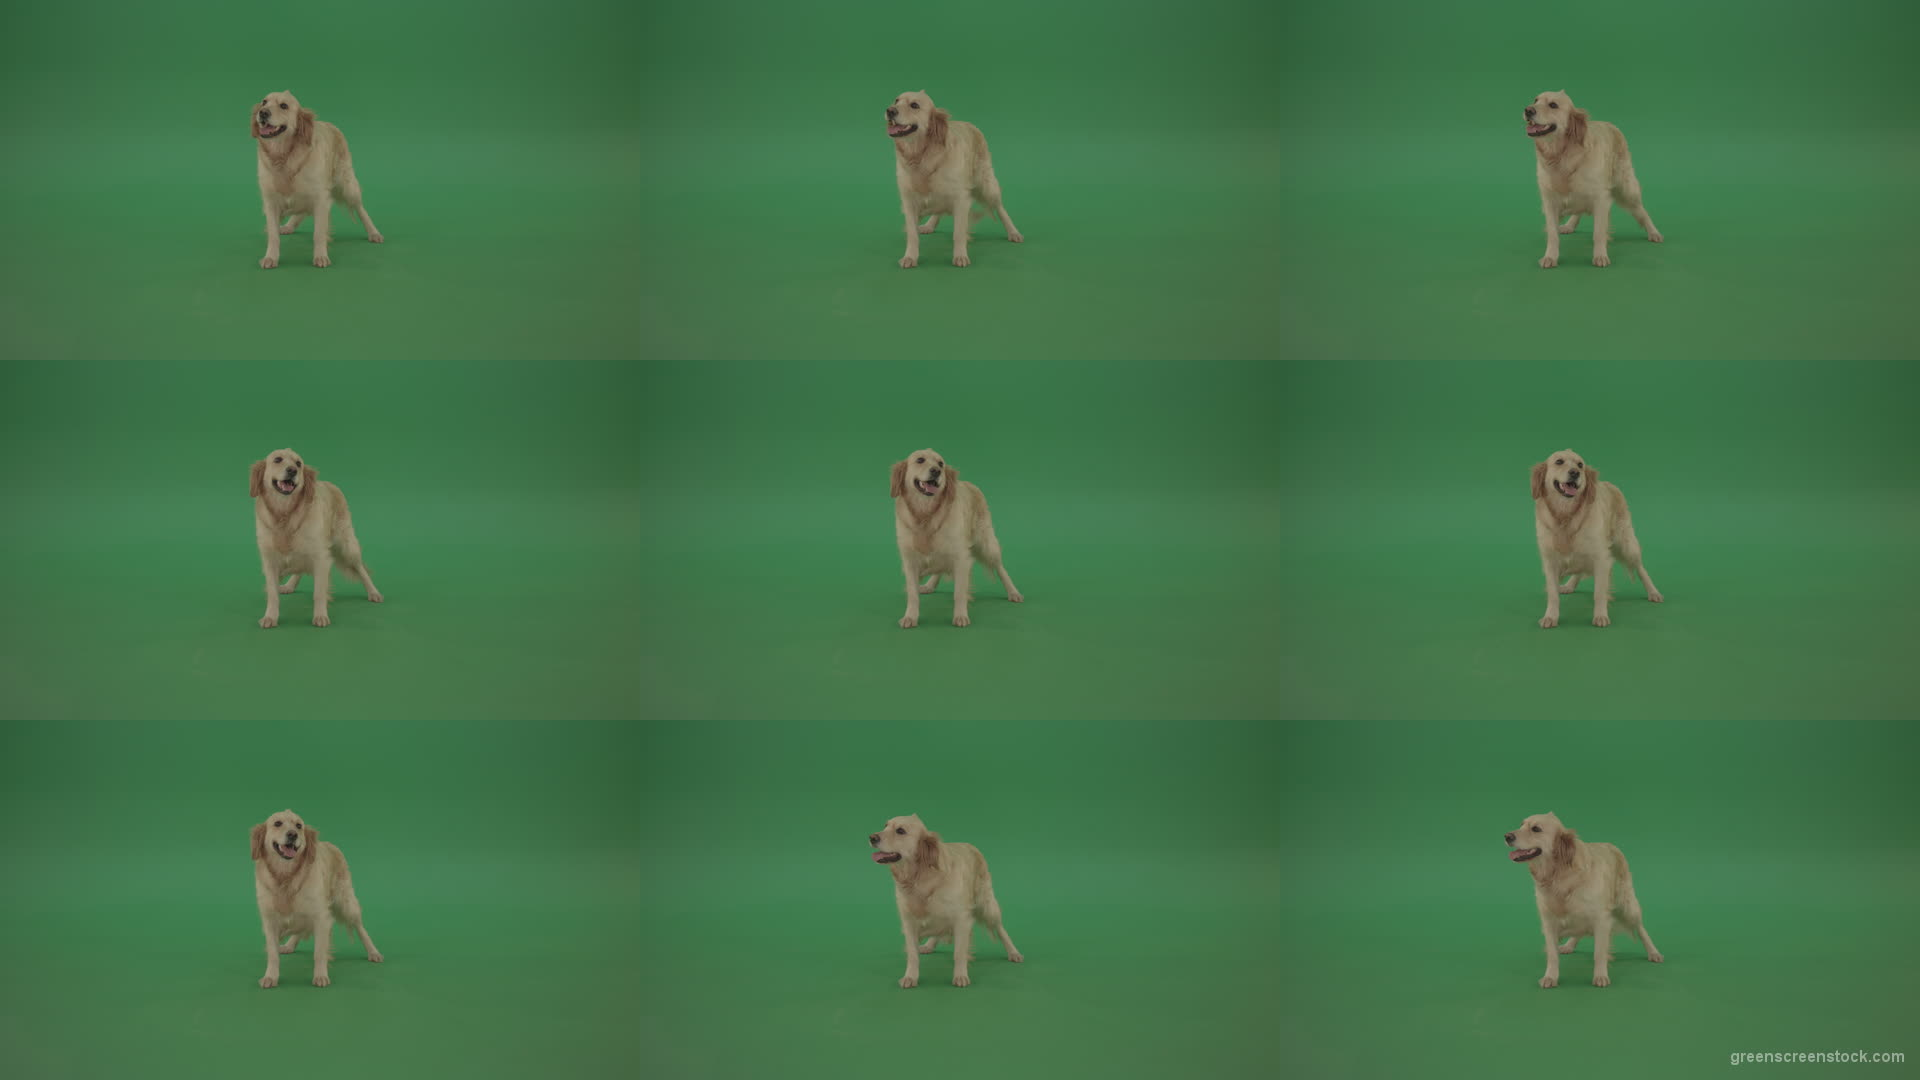 Golden-Retriever-Gun-Dog-Bird-Dog-stand-isolated-in-green-screen-studio Green Screen Stock